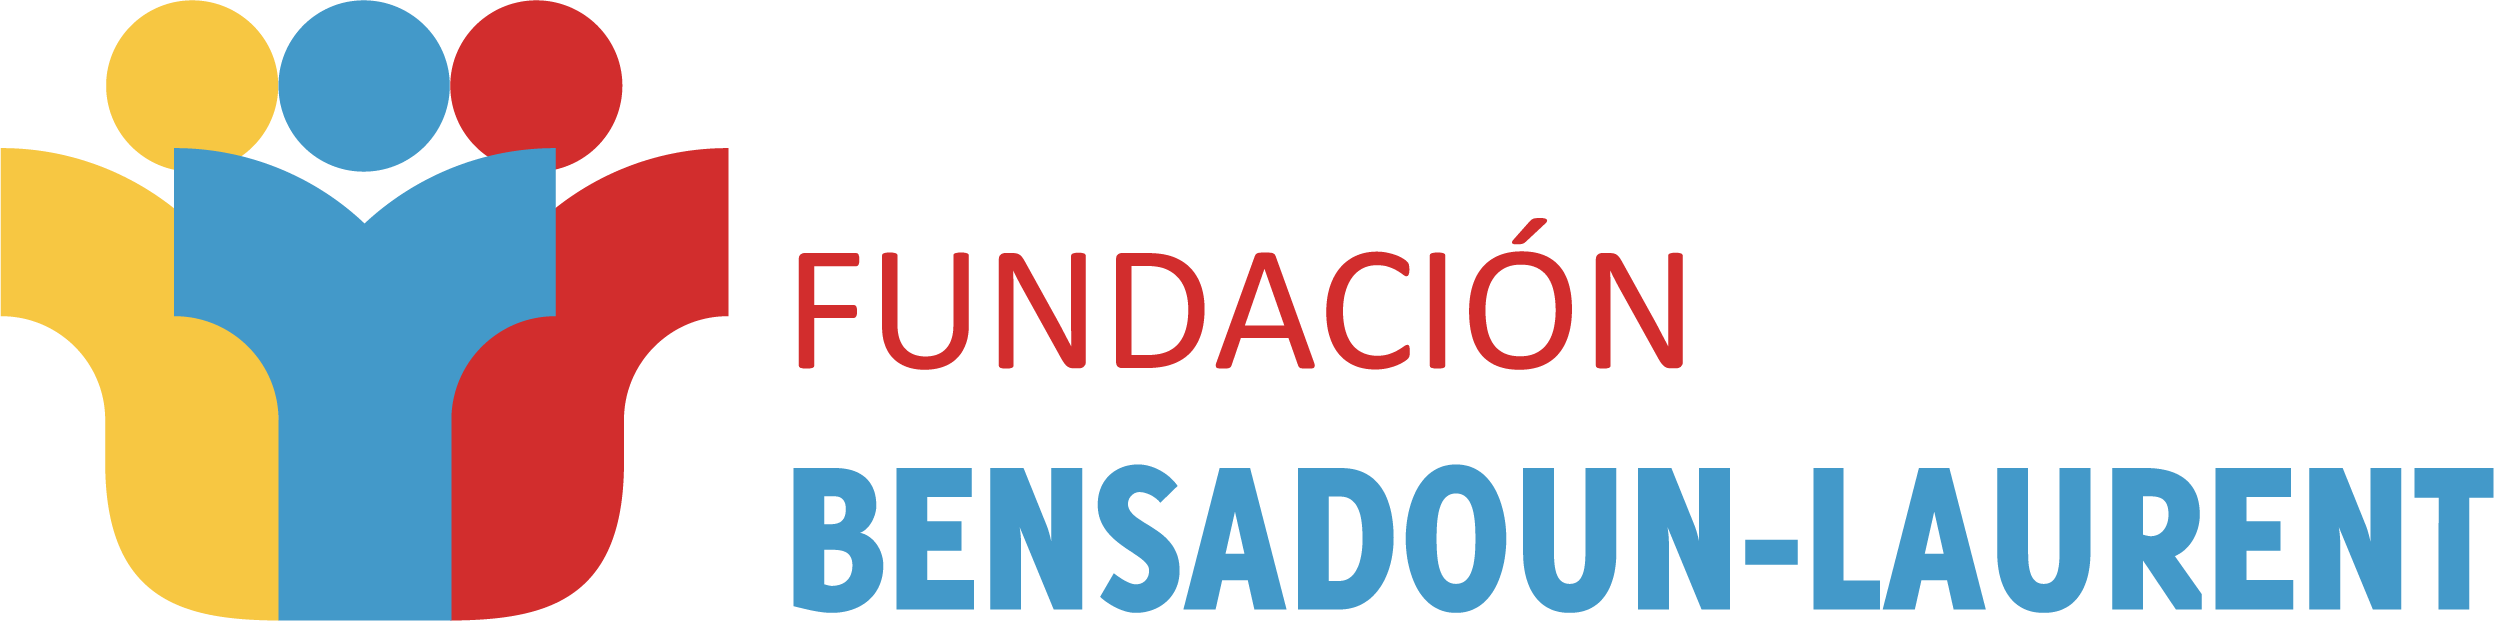 Fundación Bensadoun Laurent